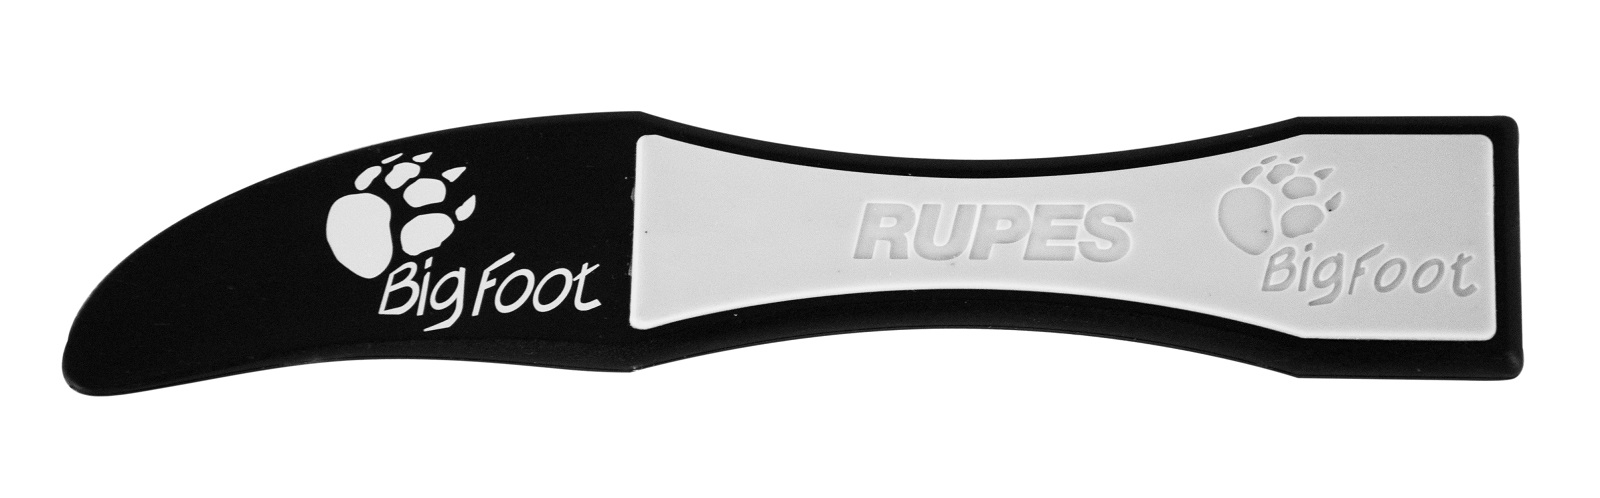 Rupes Bigfoot Claw Pad Tool